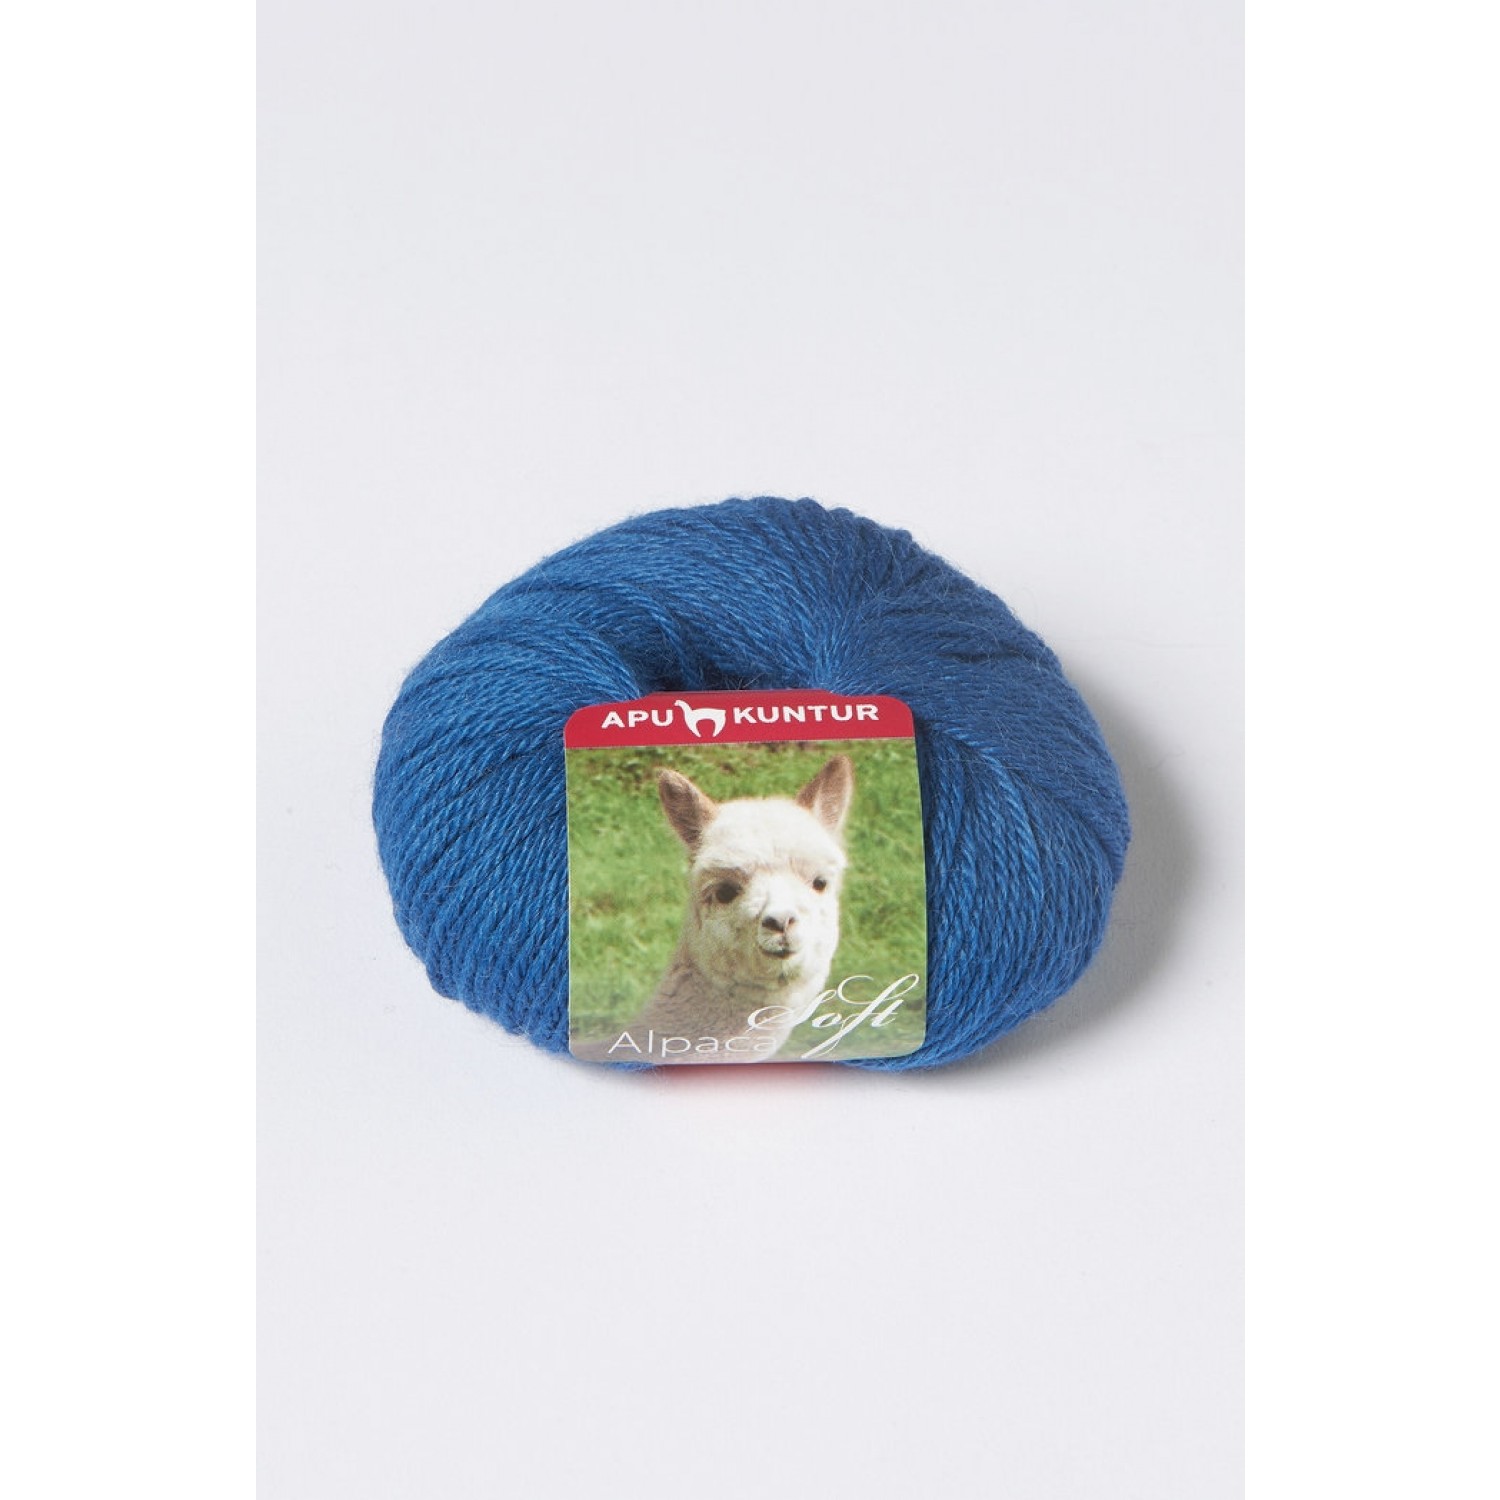 Baby Alpaca-Soft knit crochet yarn, 50g eco wool ball | Apu Kuntur